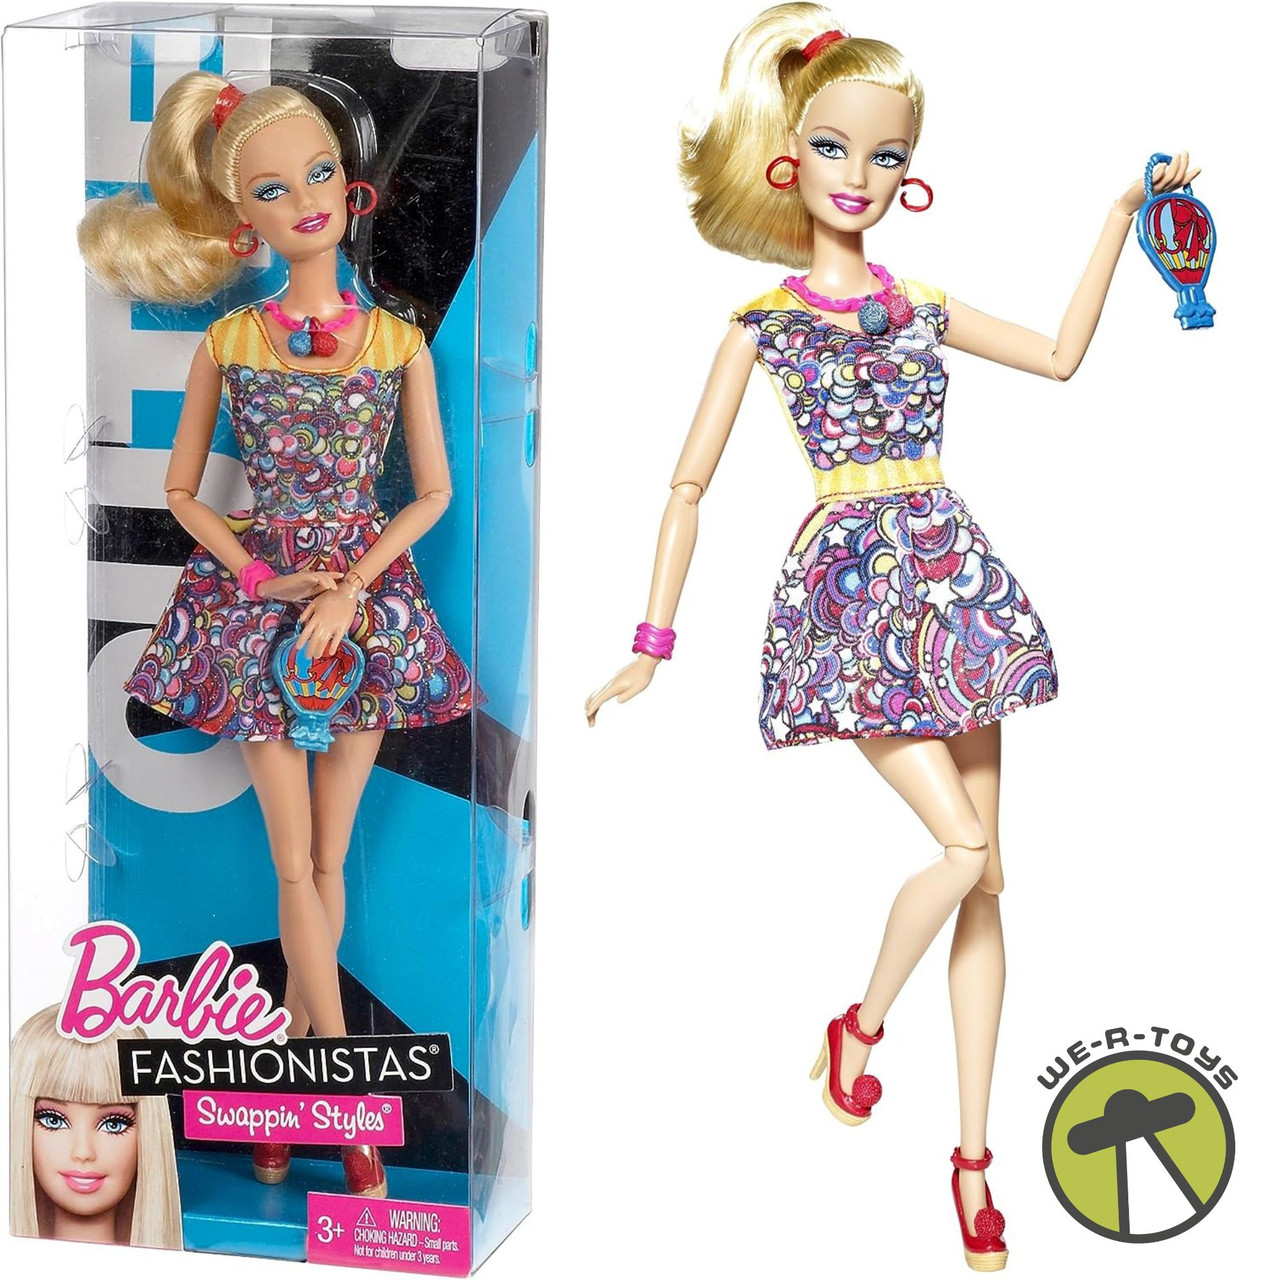 Barbie Fashionistas Swappin’ Styles Cutie Doll 2011 Mattel V4381 NEW